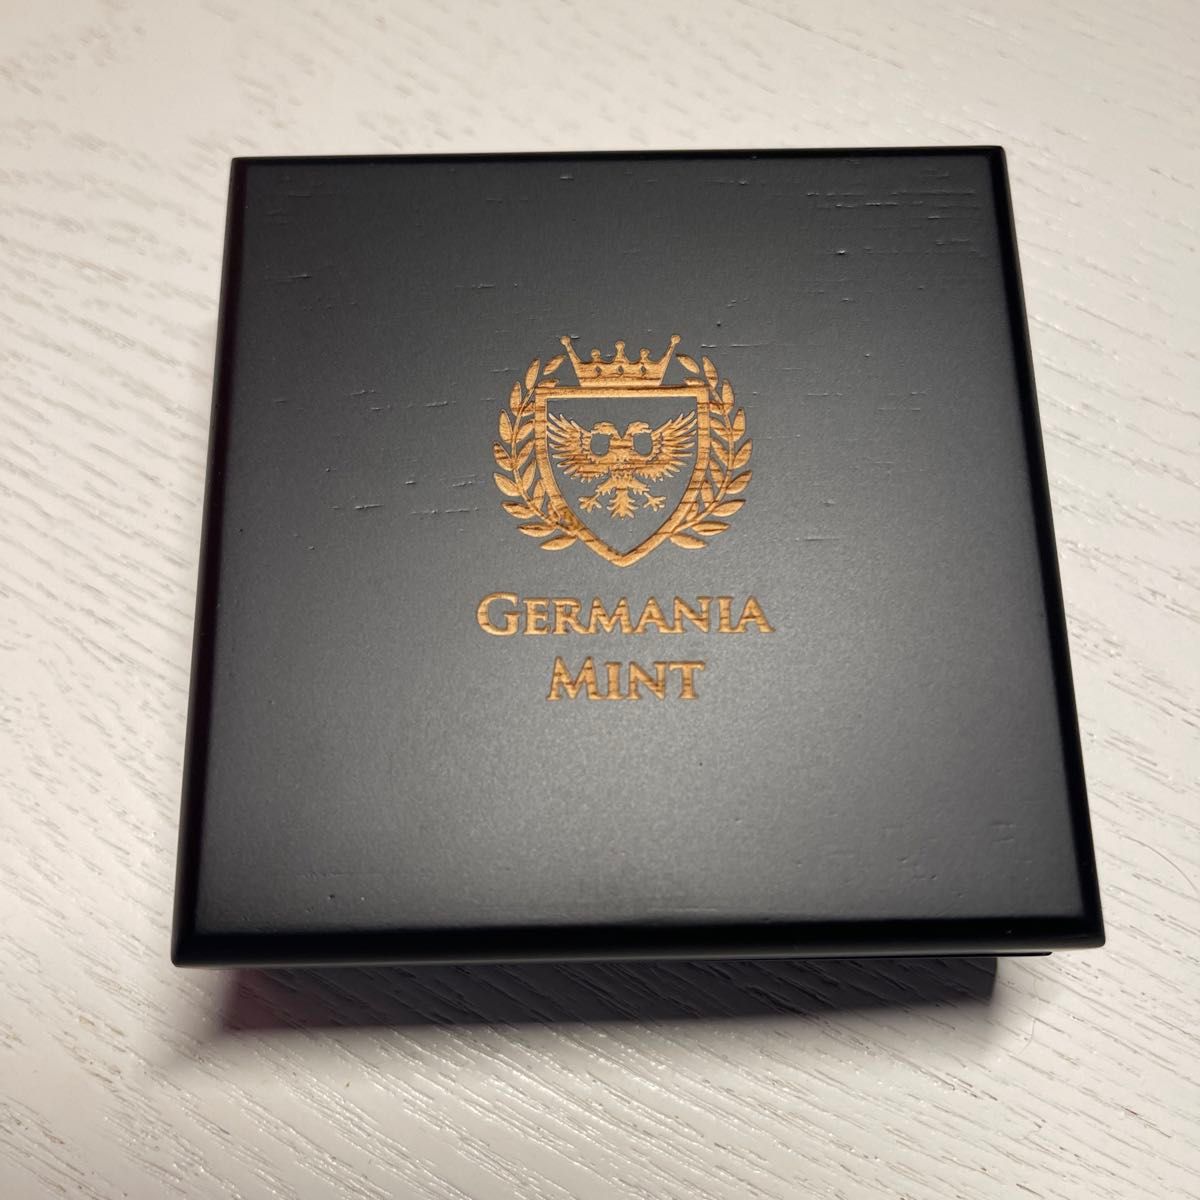 GERMANIA 2019    No85/250   BLACK Varnish 9999Ag